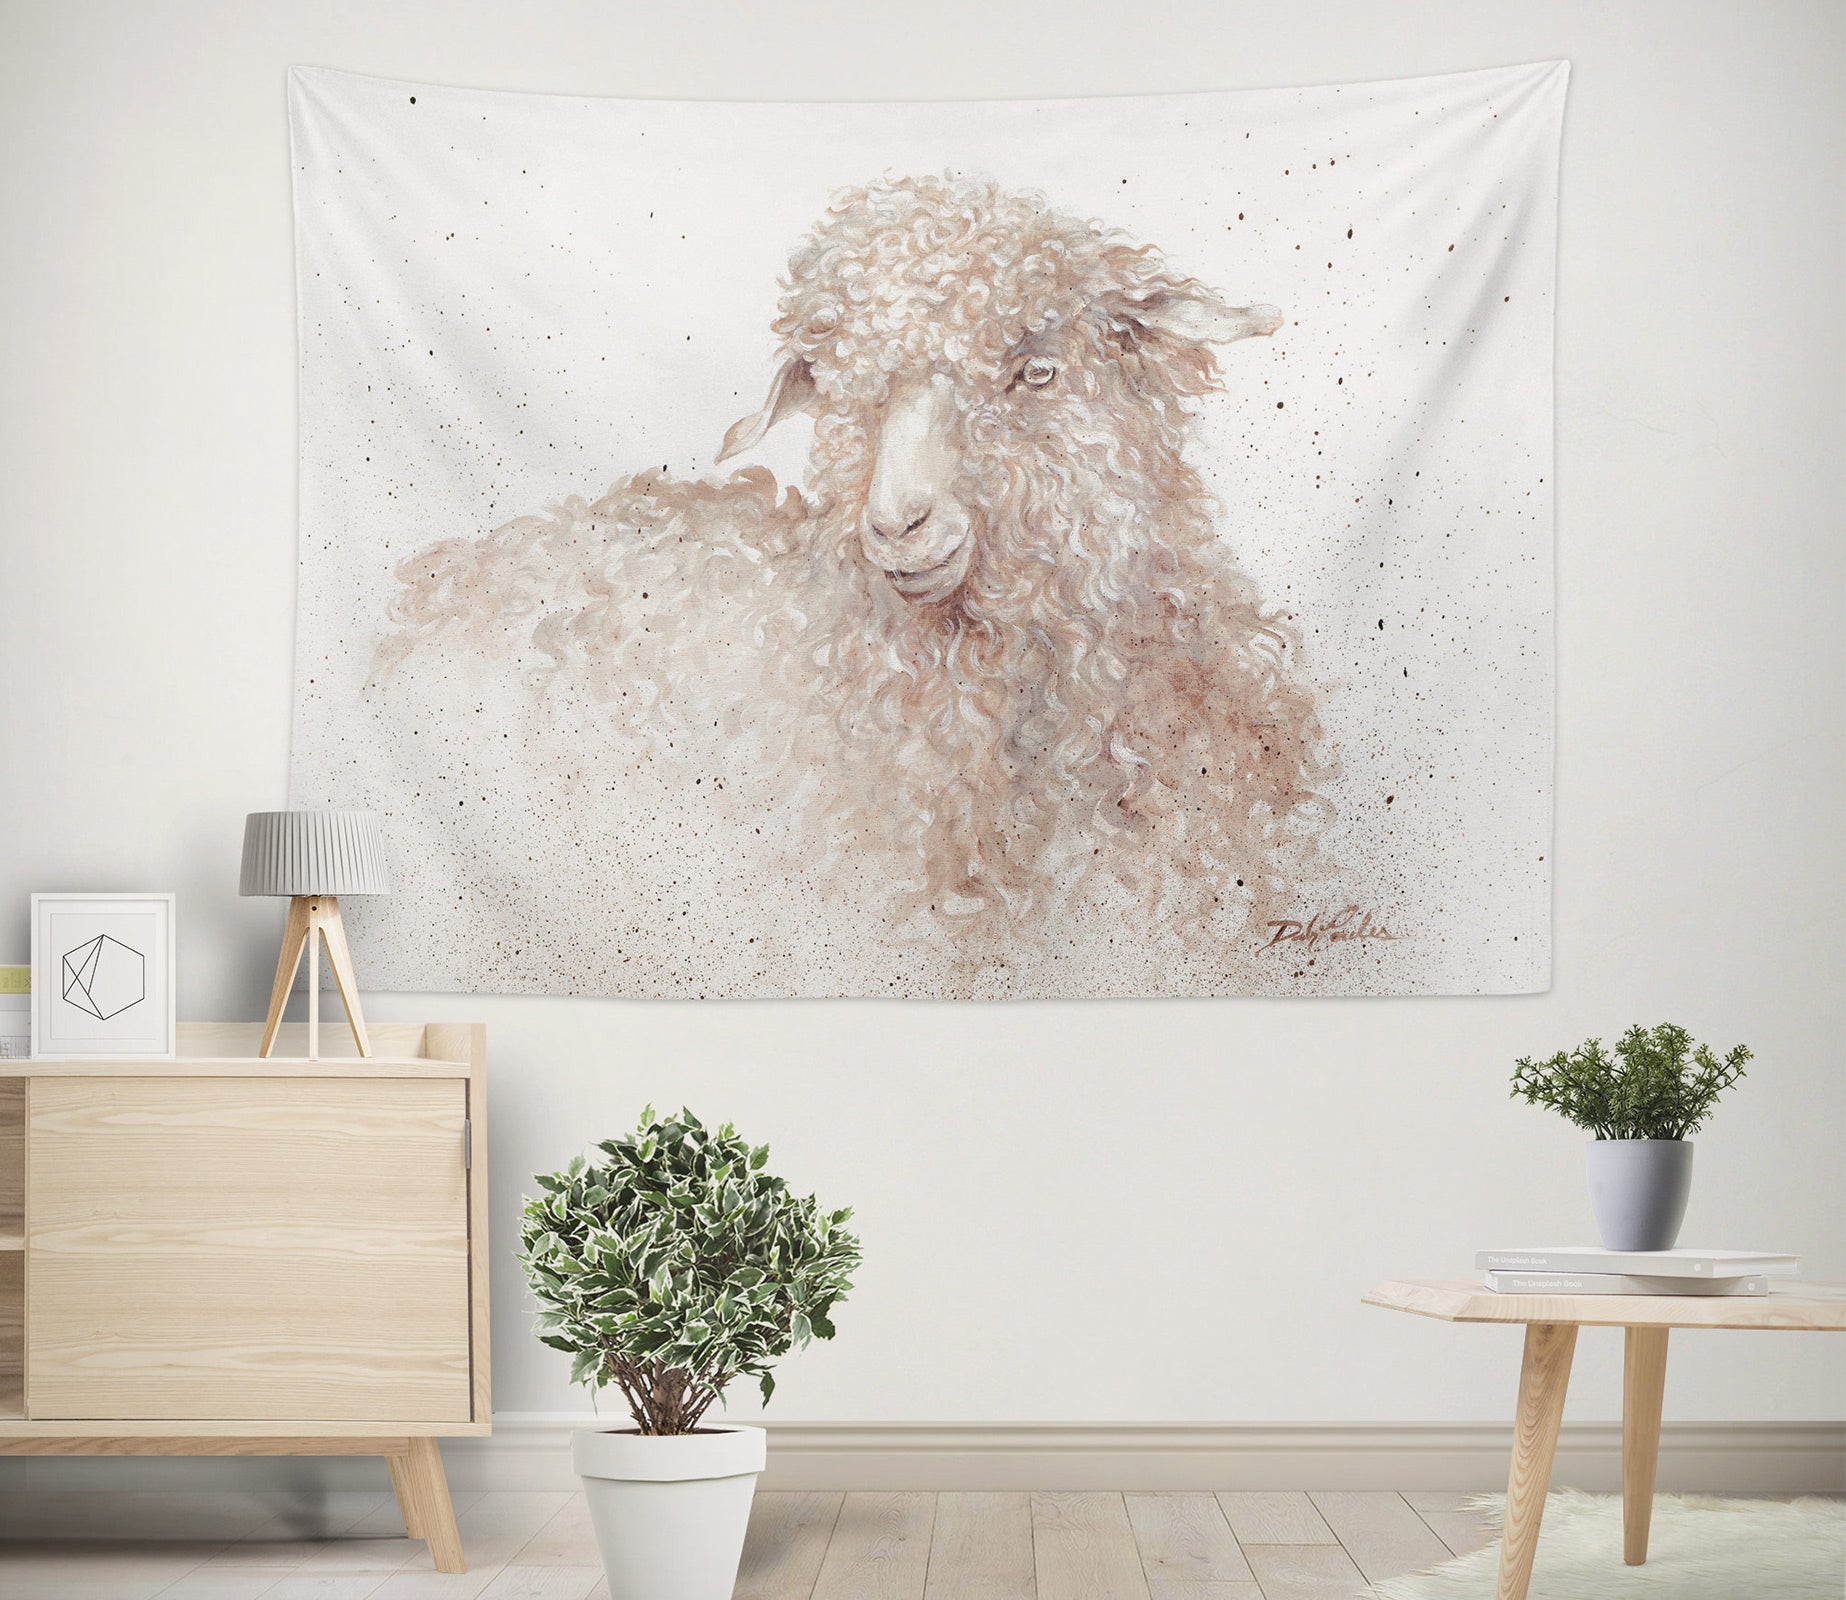 3D Sheep 111193 Debi Coules Tapestry Hanging Cloth Hang